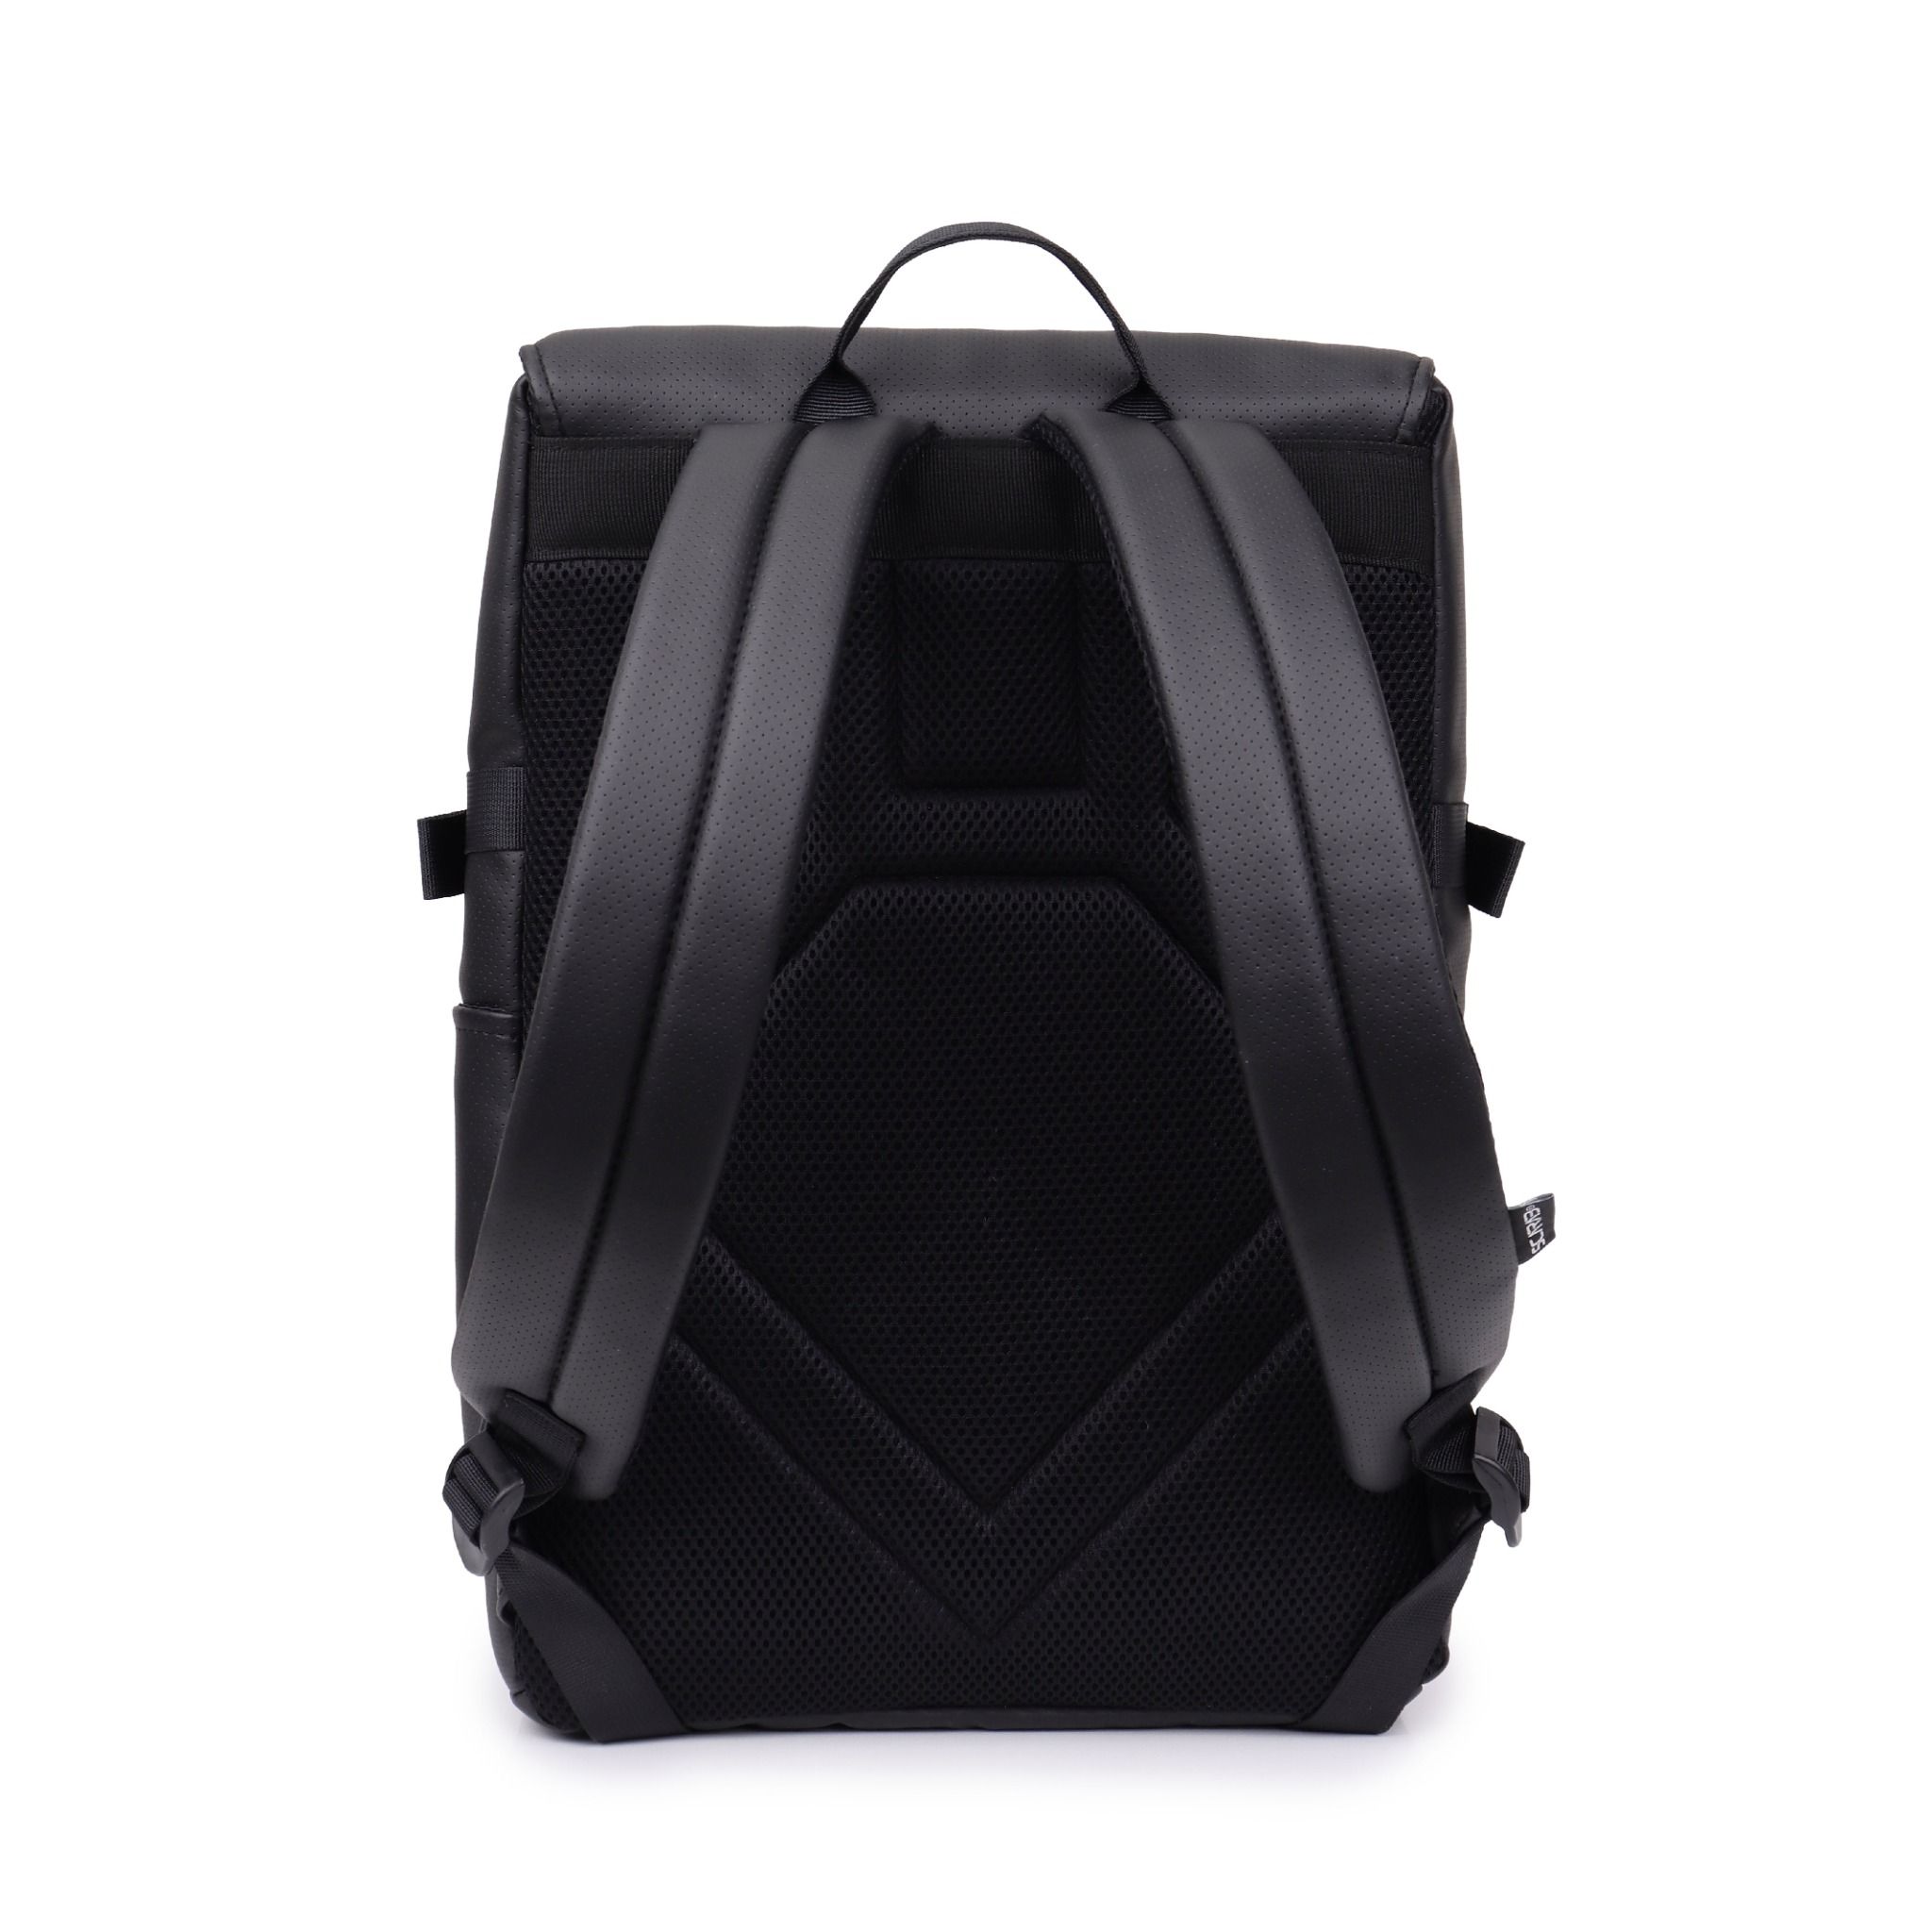  Urban Leather Backpack - Black 